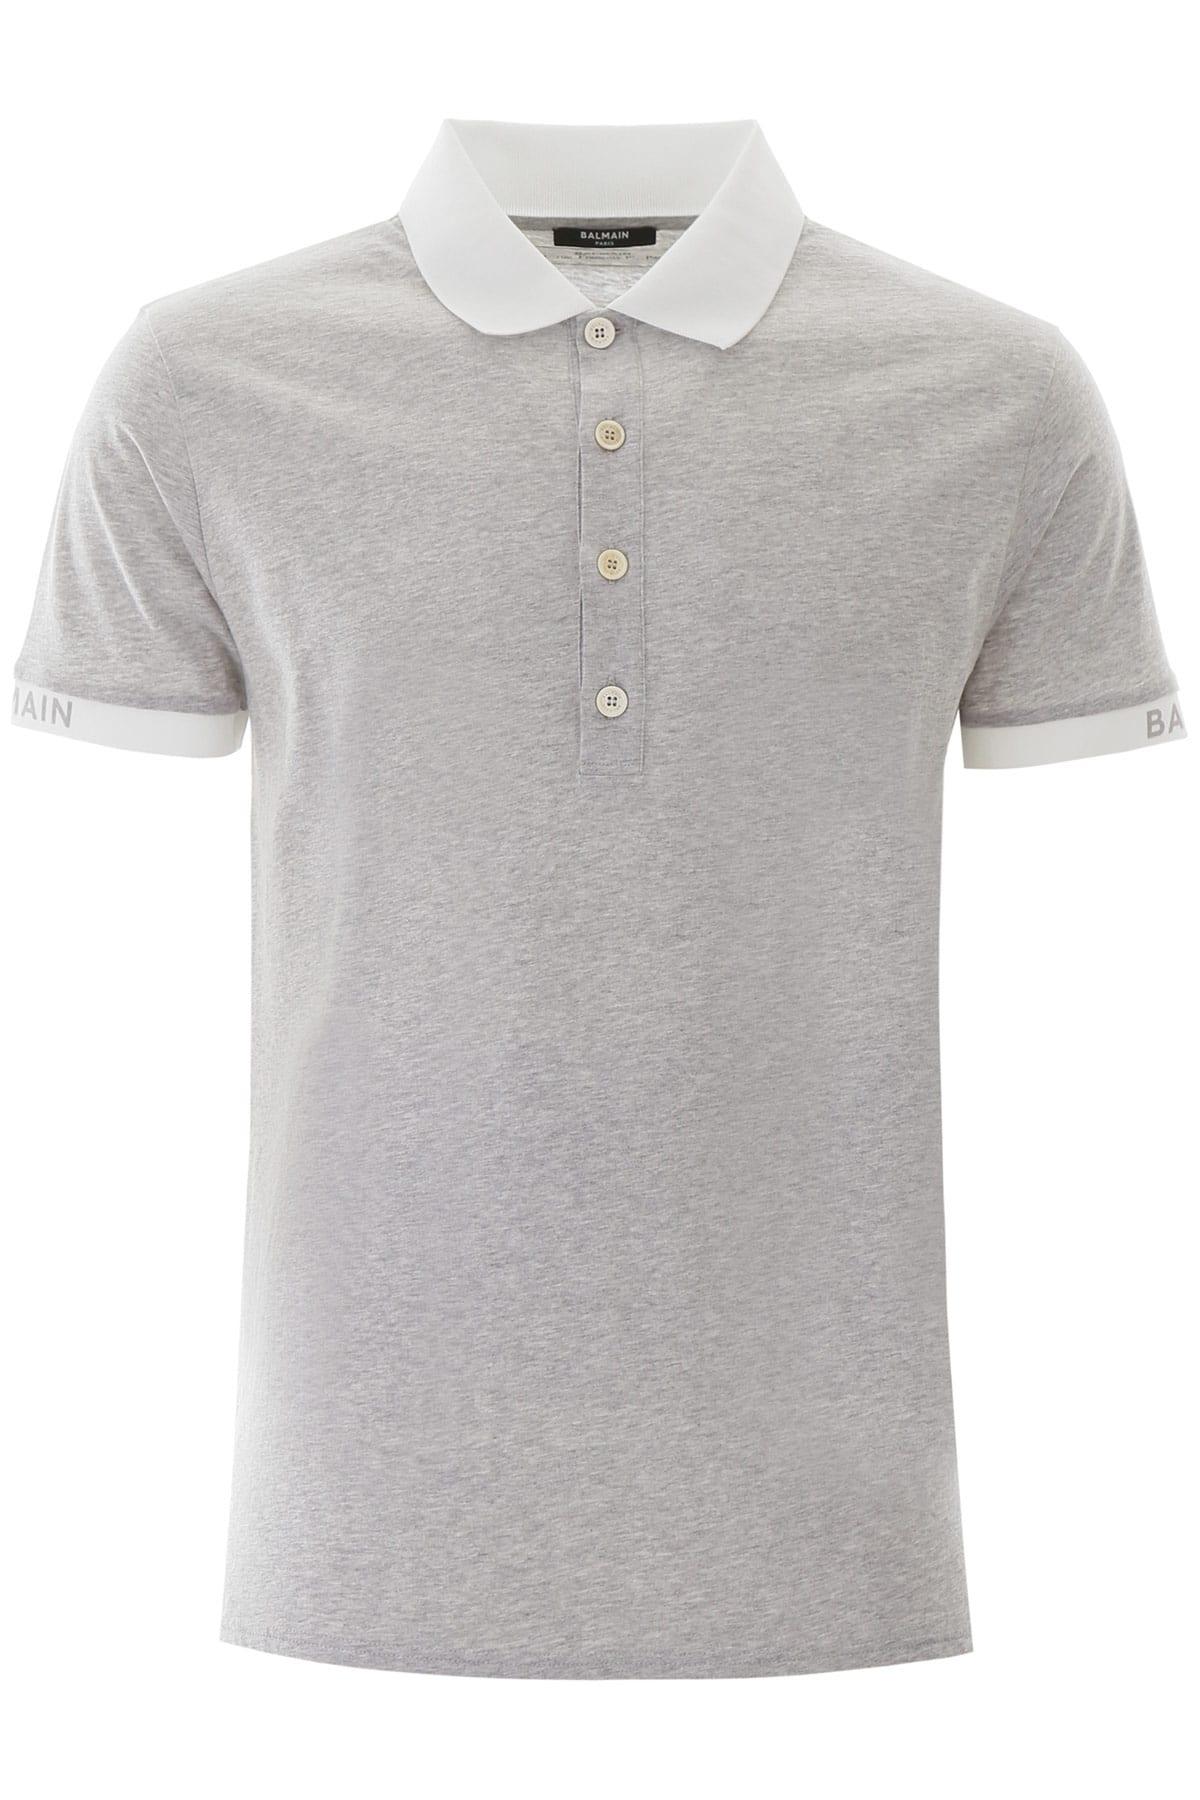 Balmain Cotton Ribbed Polo Shirt in Grey (Gray) for Men - Lyst